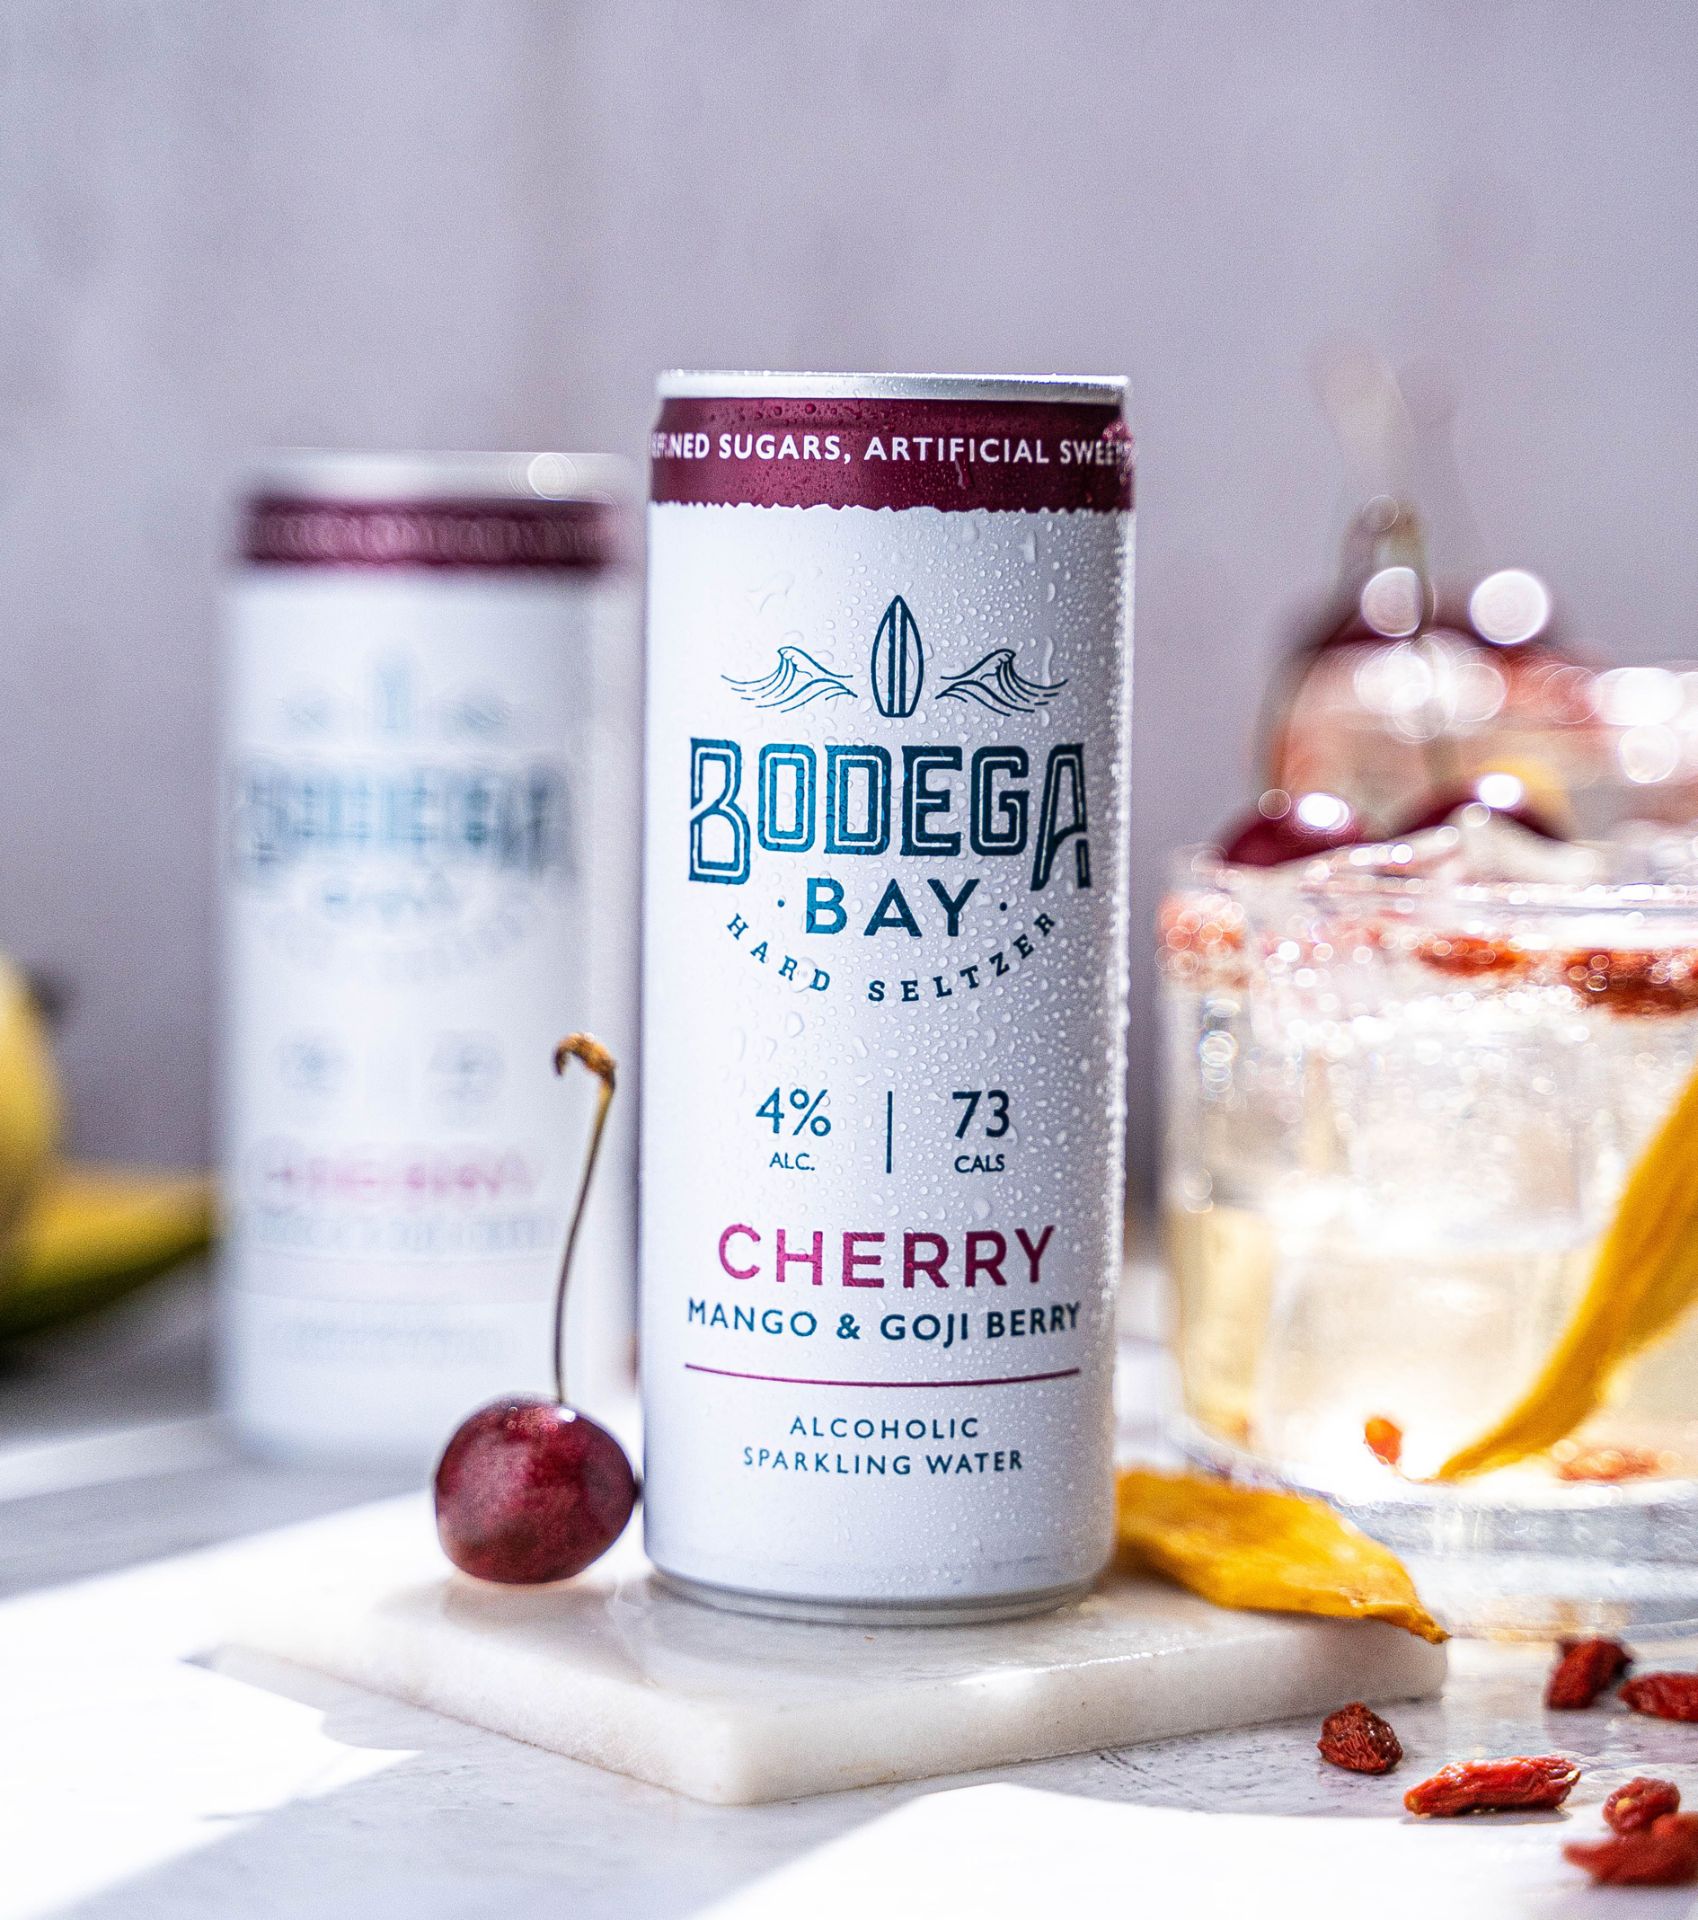 24 x Bodega Bay Hard Seltzer 250ml Alcoholic Sparkling Water Drinks - Cherry Mango & Goji Berry - 4% - Image 5 of 7